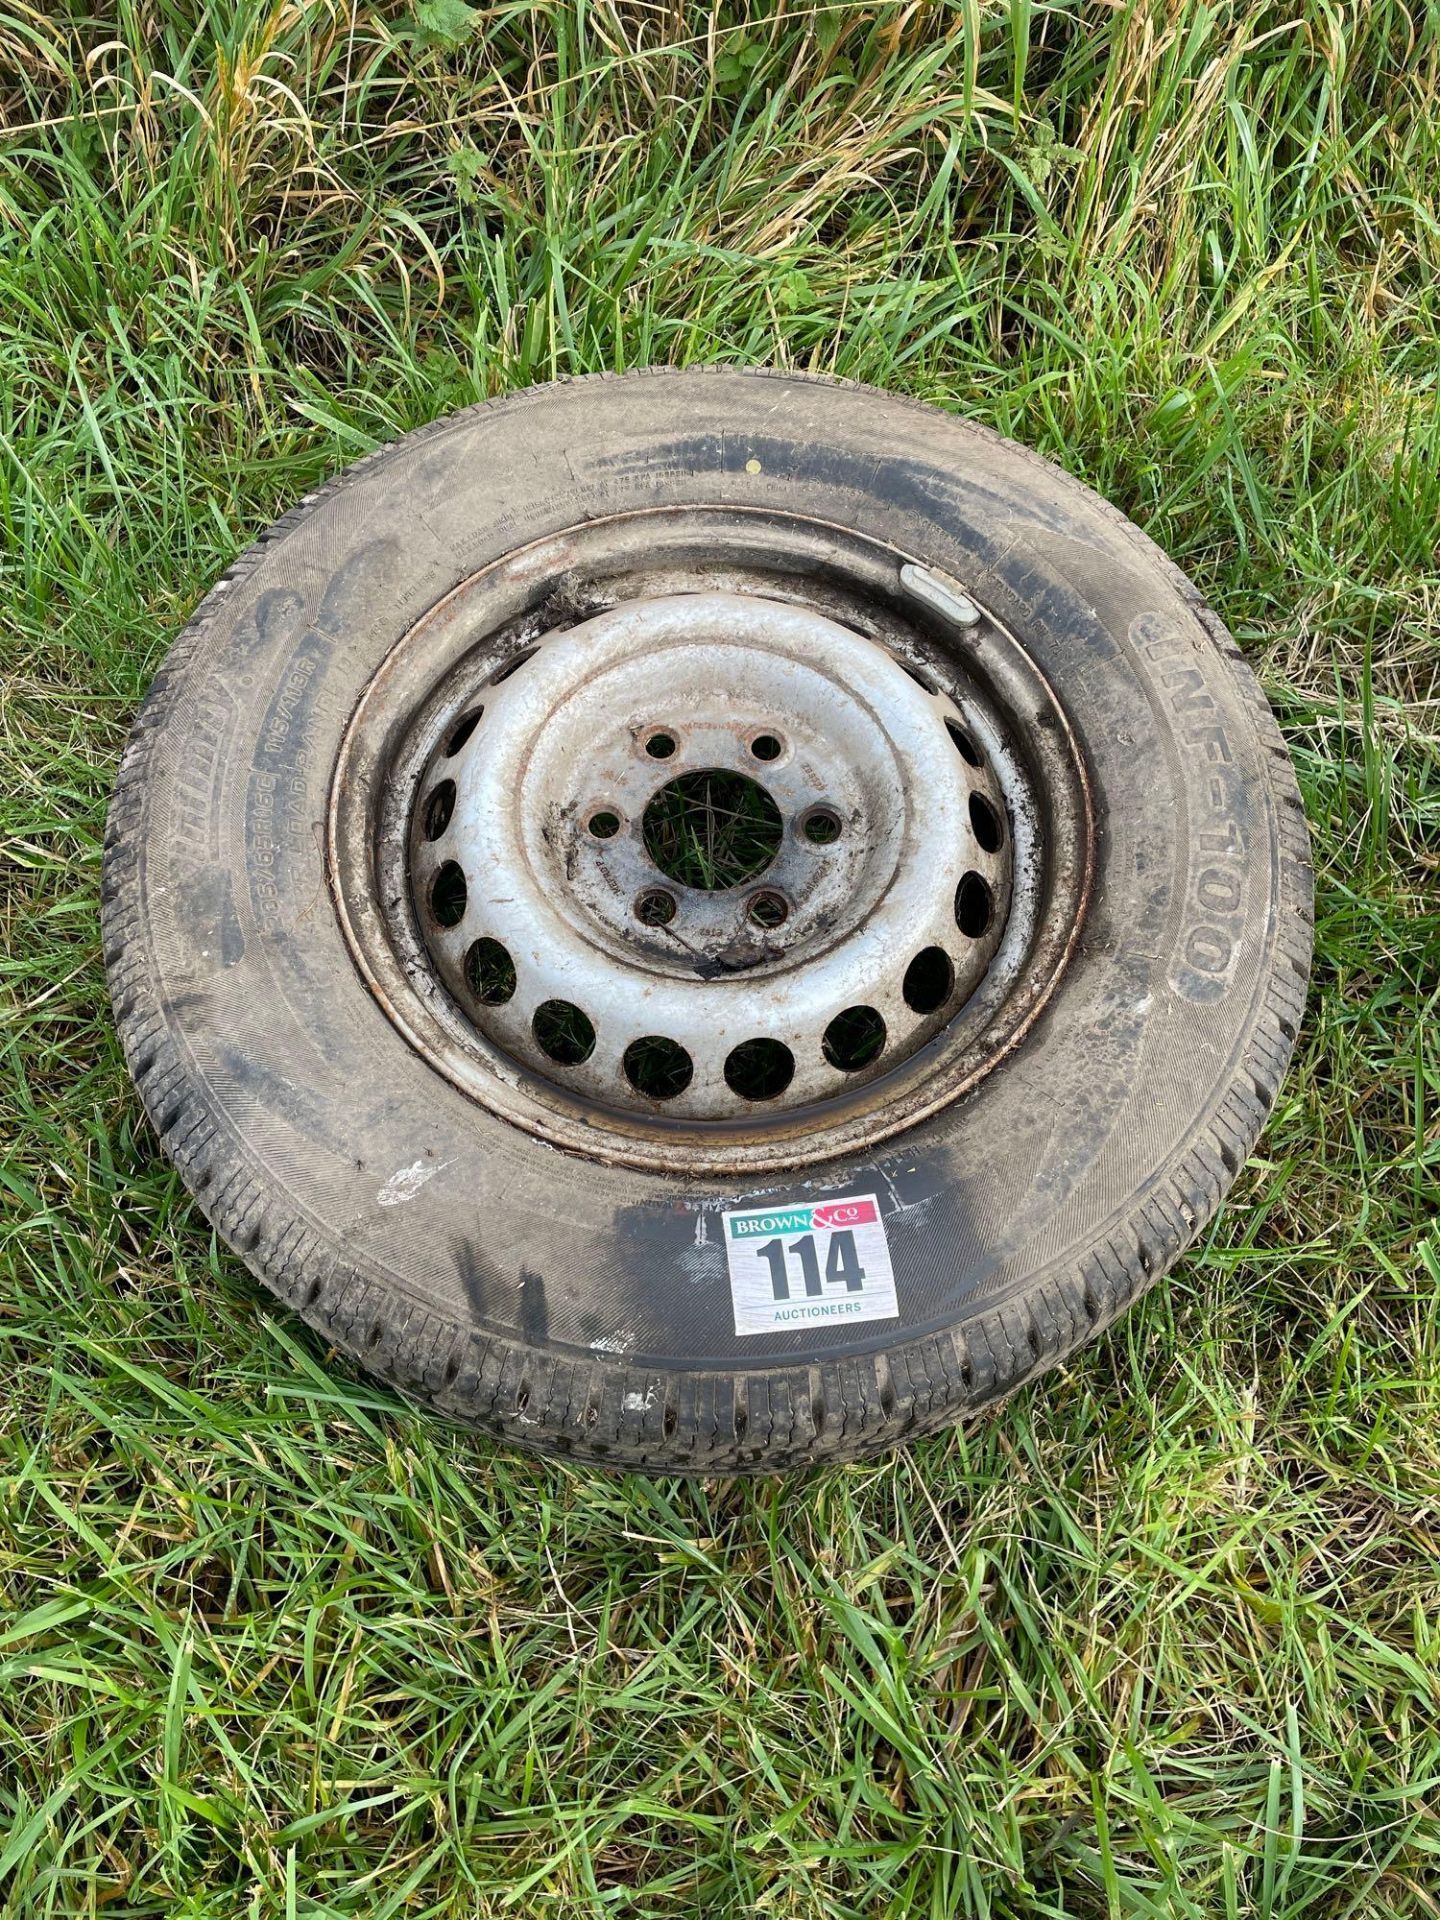 Single 235/65R16C wheel and tyre